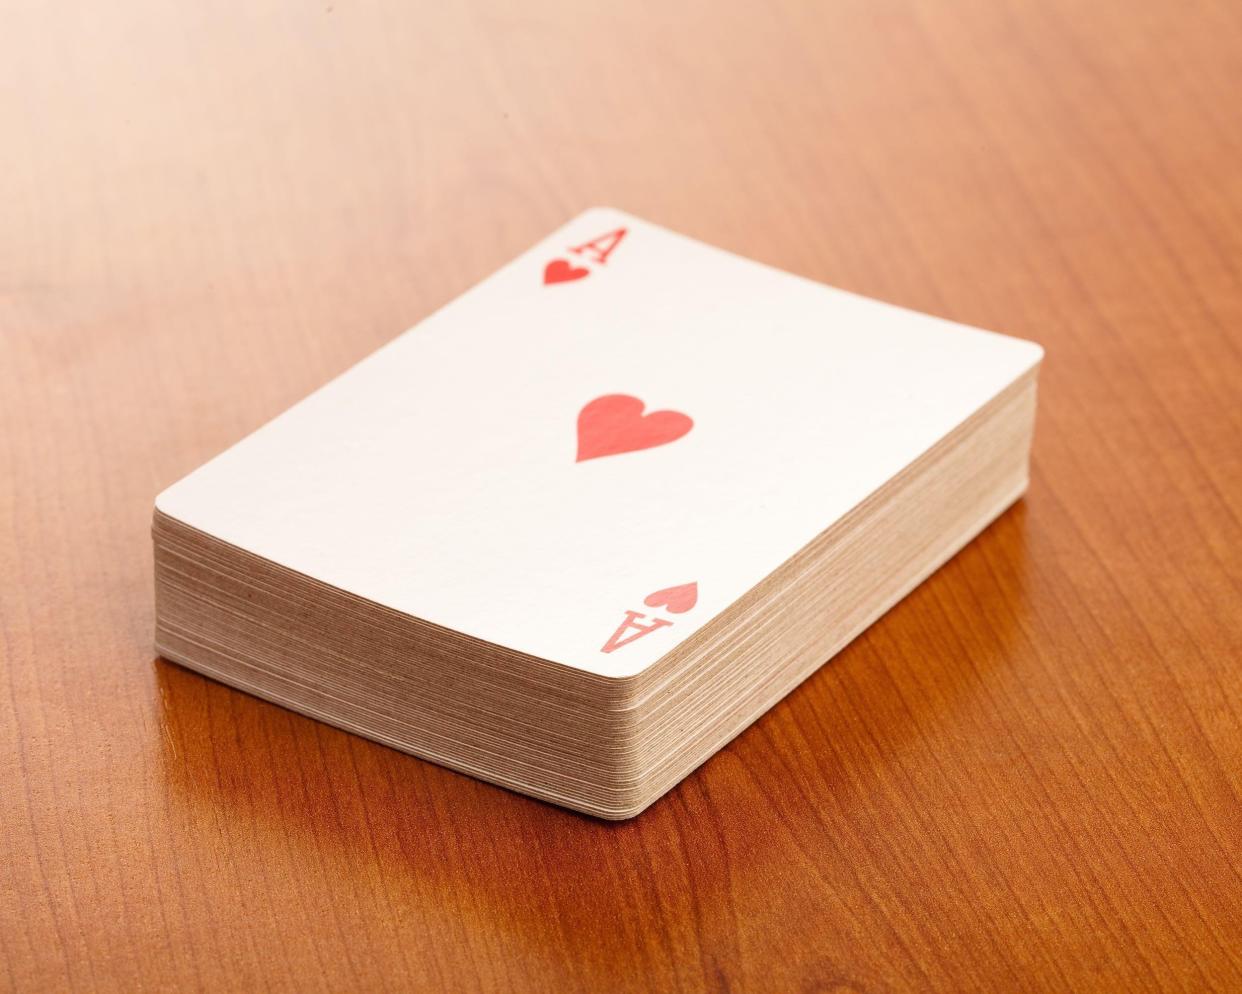 card deck